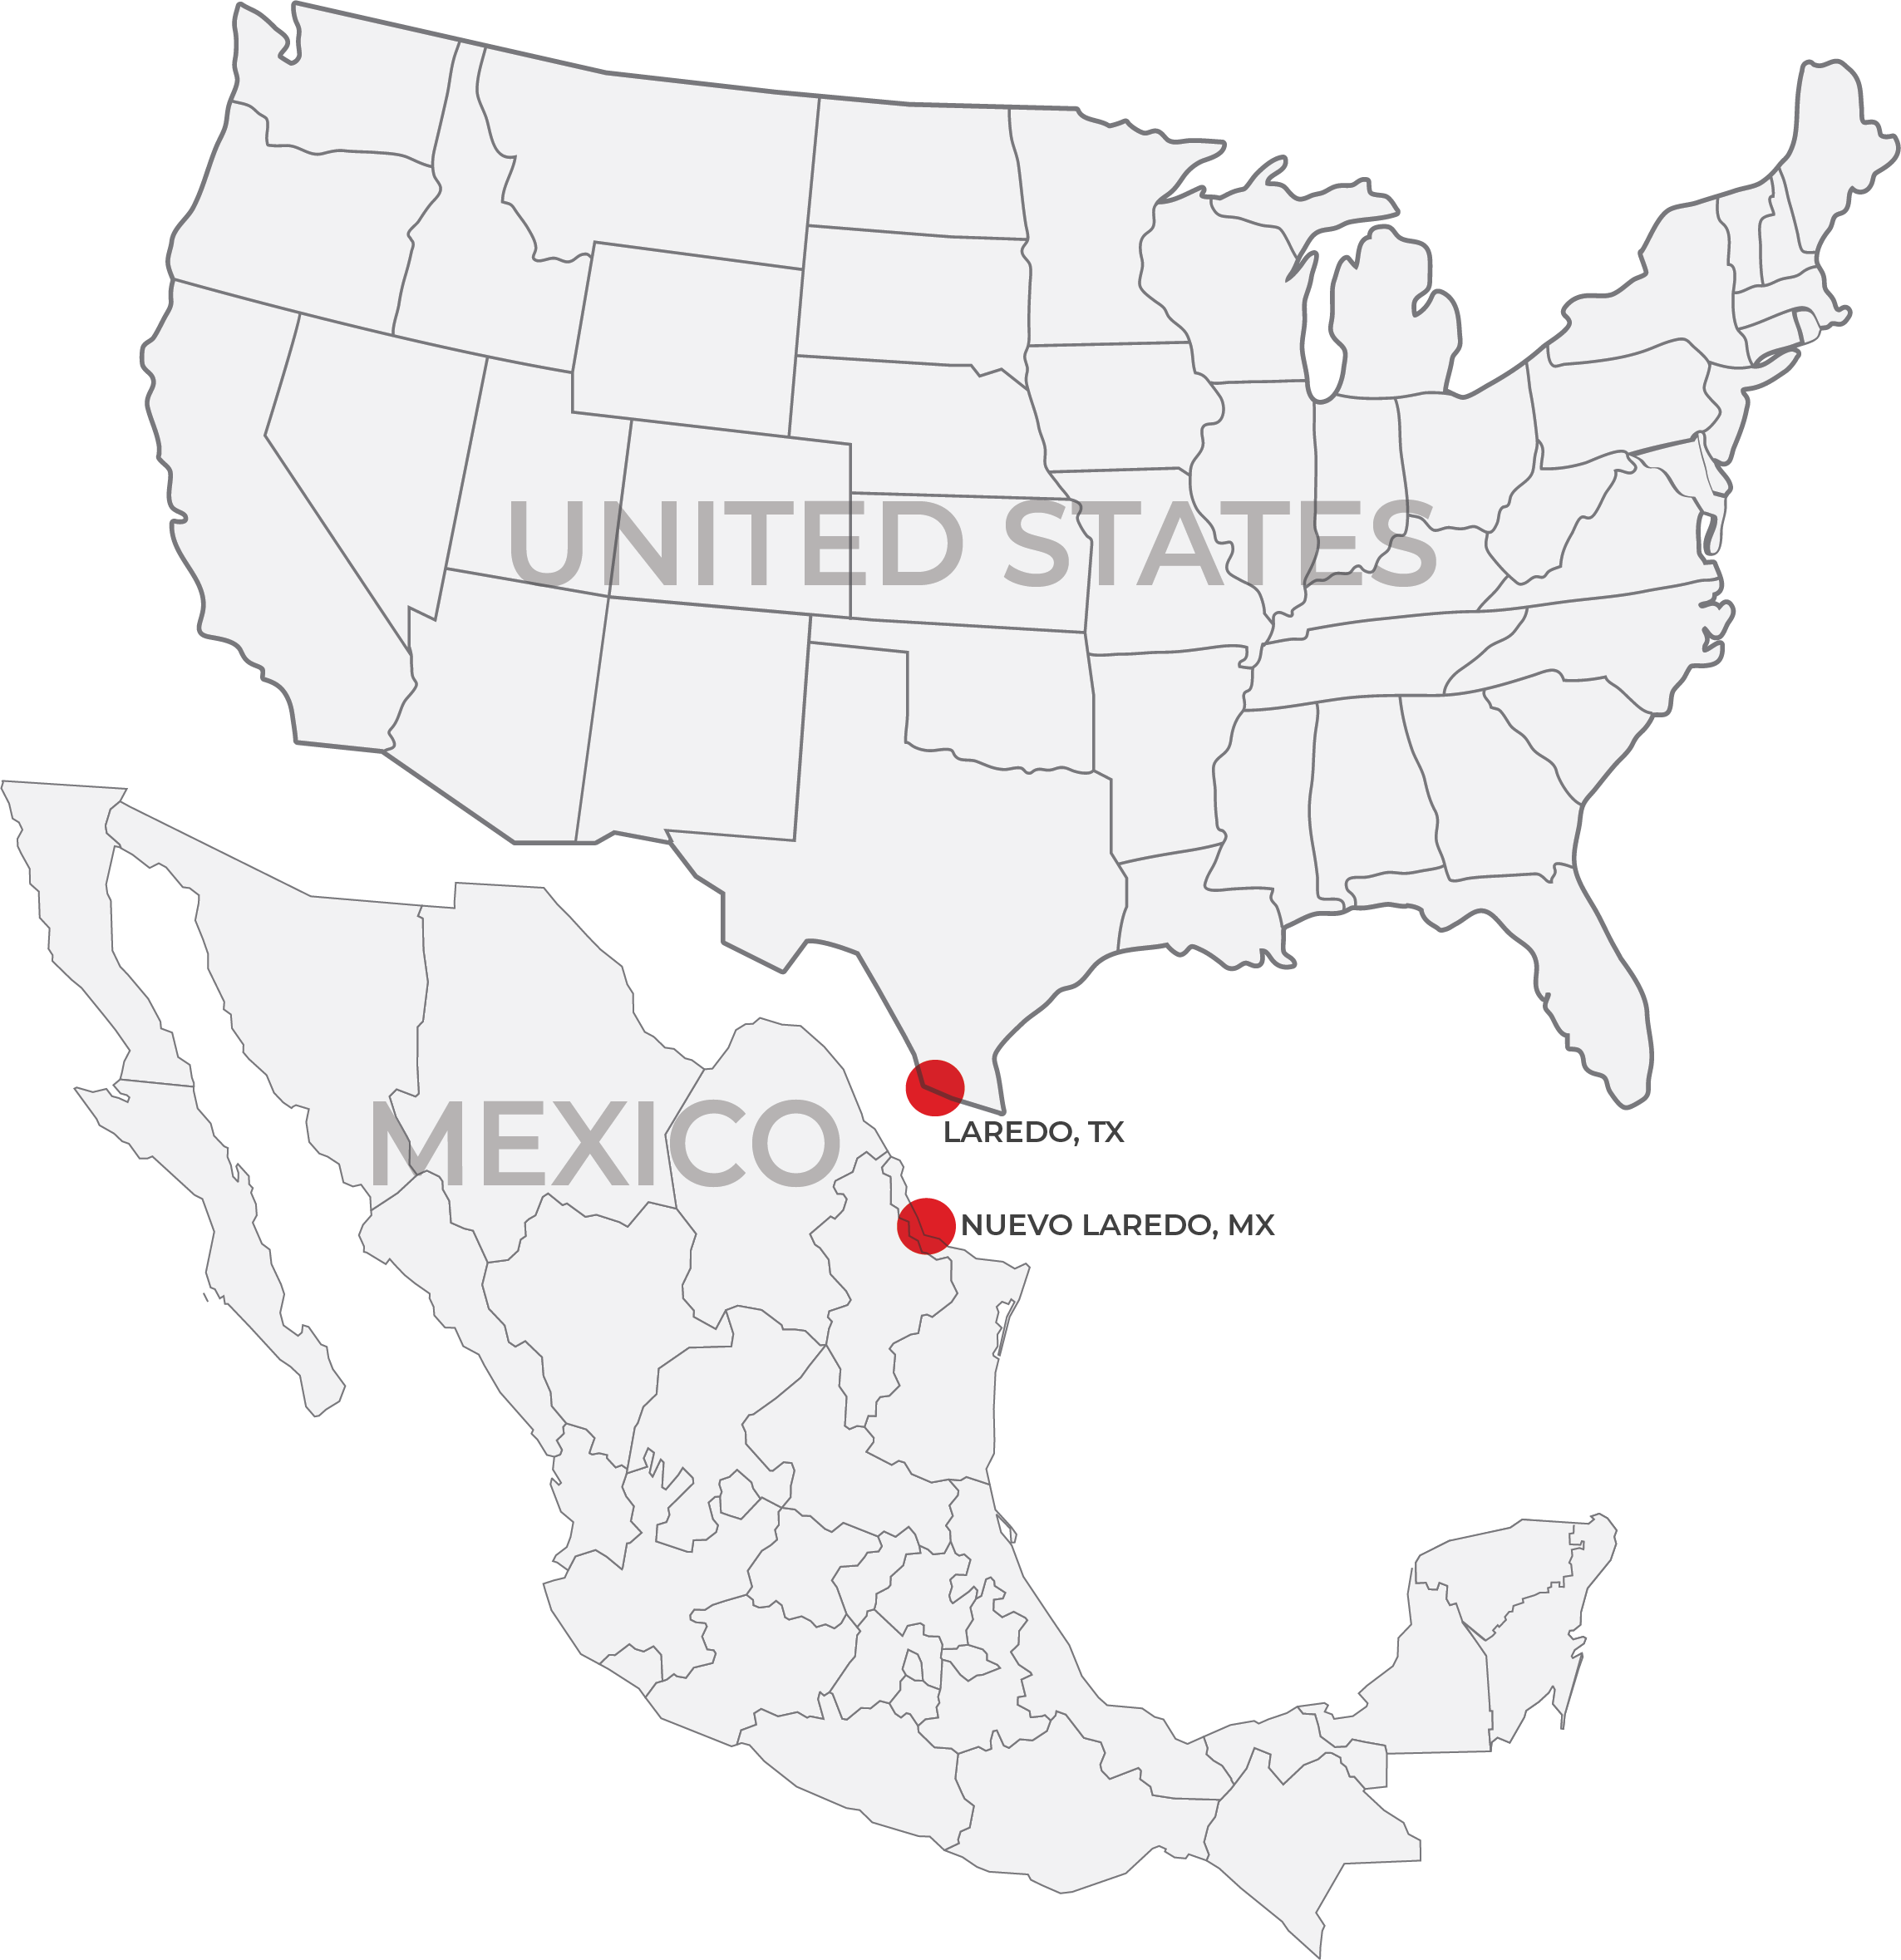 United states and mexico map for bridge cross border in laredo , tx